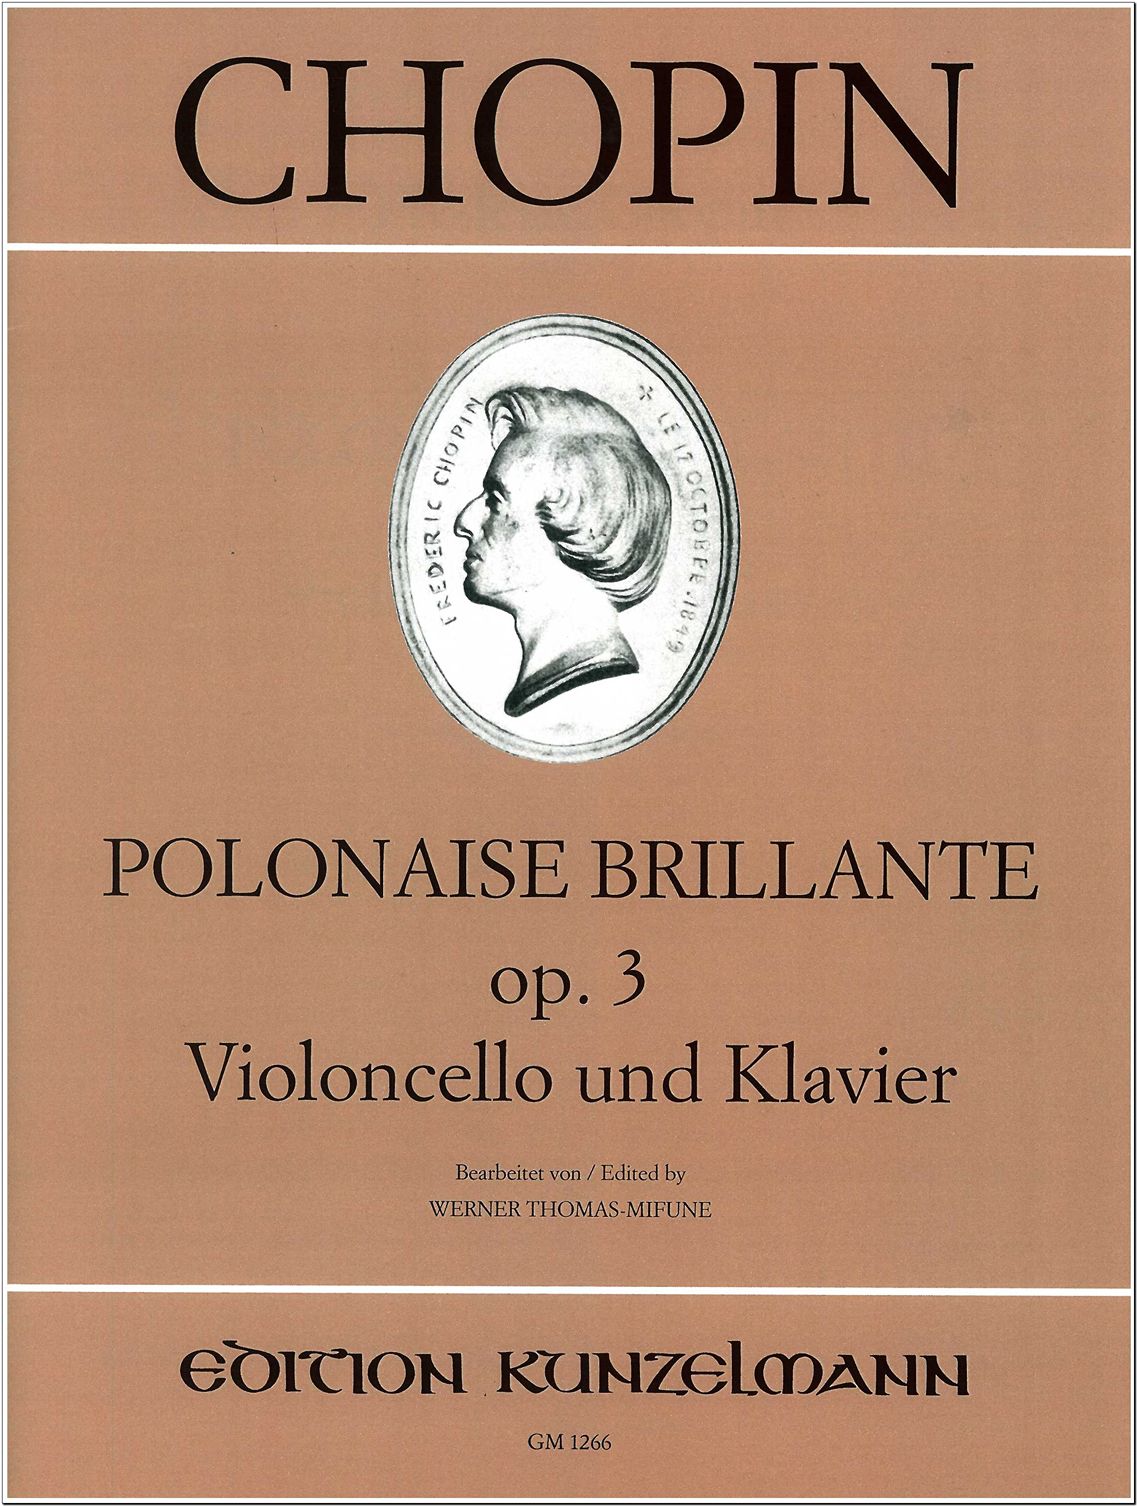 Chopin: Polonaise brillante, Op. 3